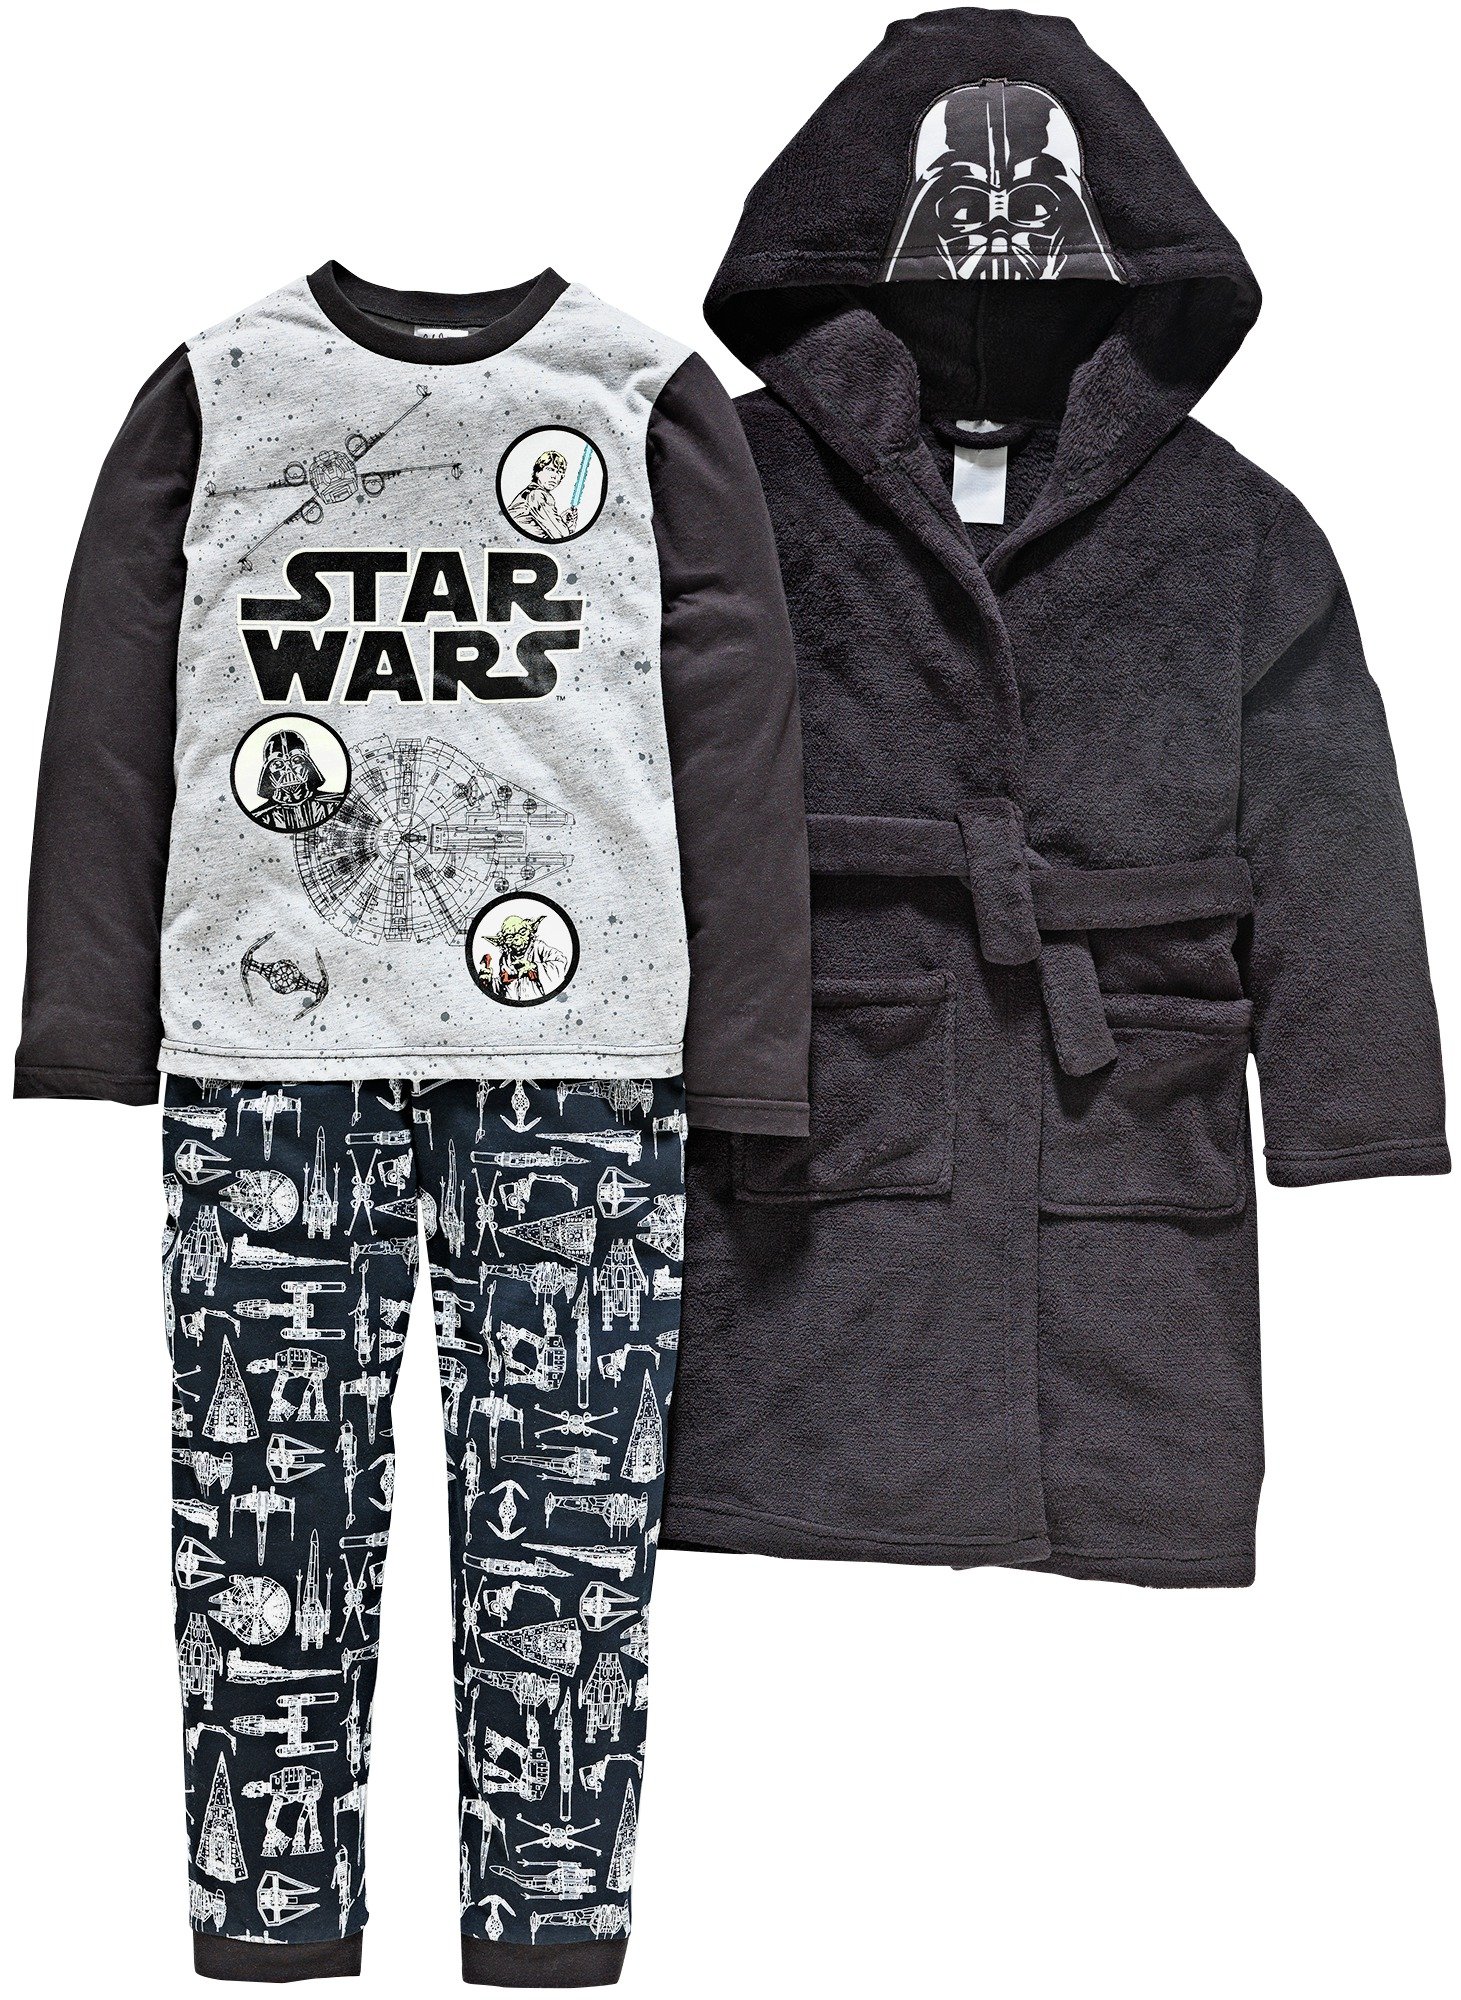 Star Wars Nightwear Set - 5-6 Years